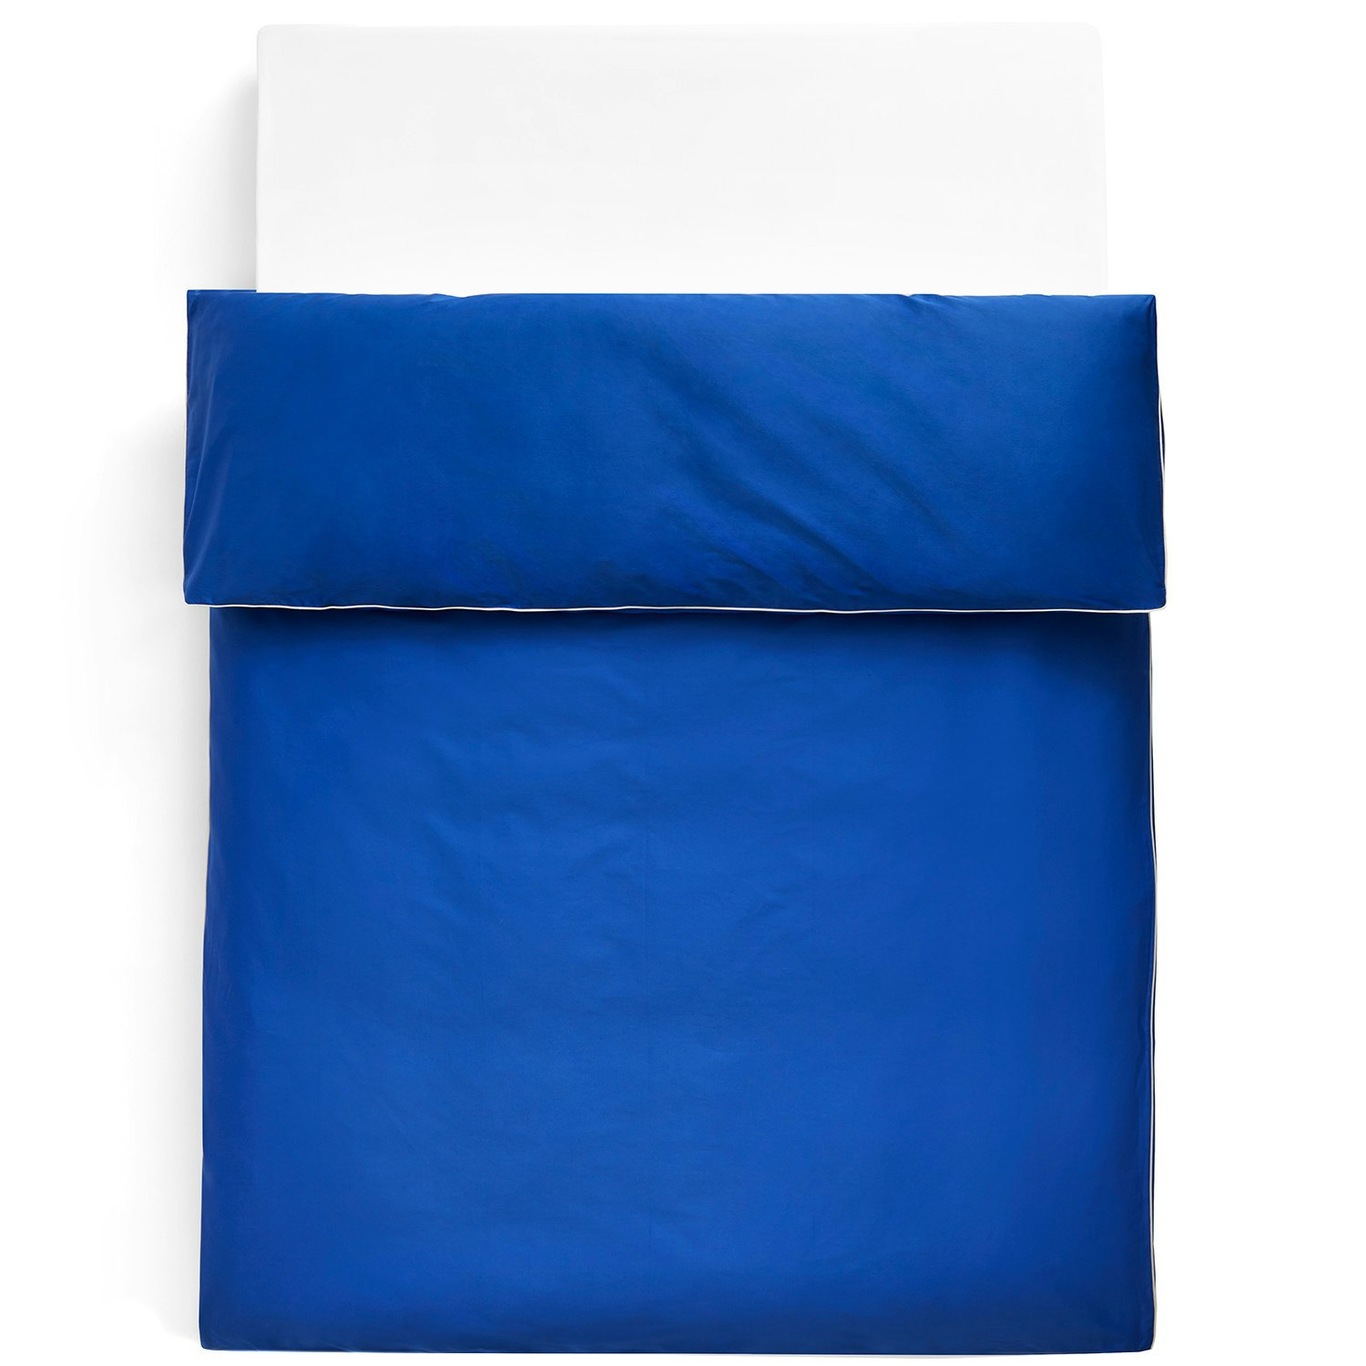 Outline Duvet Cover 140x200 cm, Vivid Blue